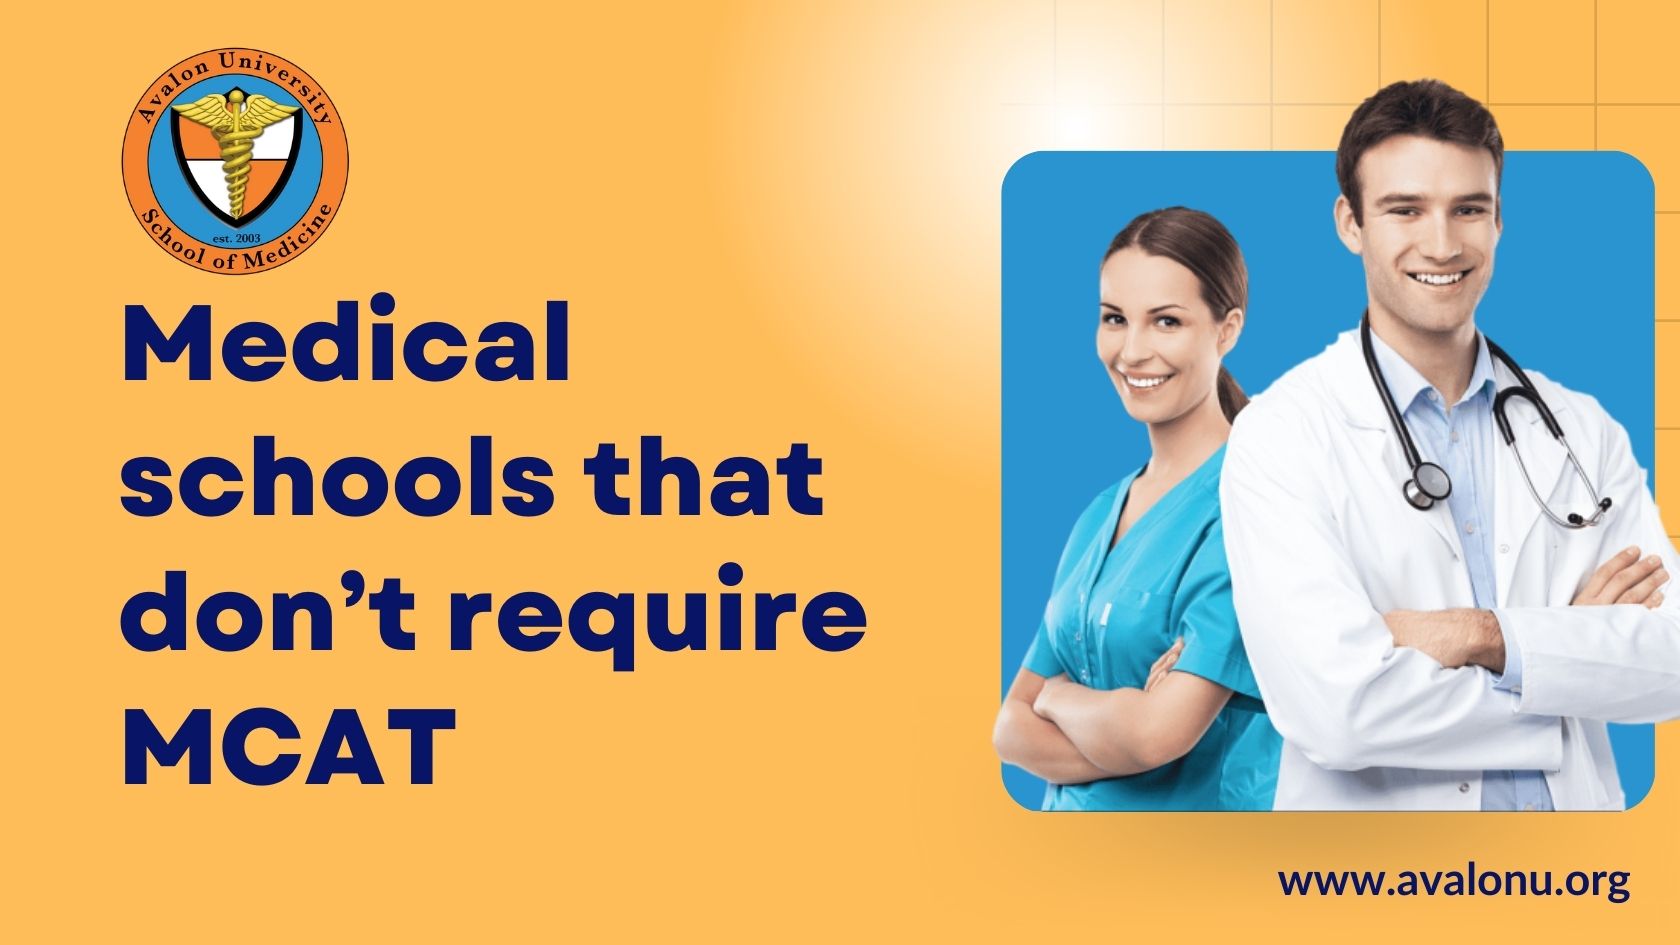 Medical schools that don’t require MCAT